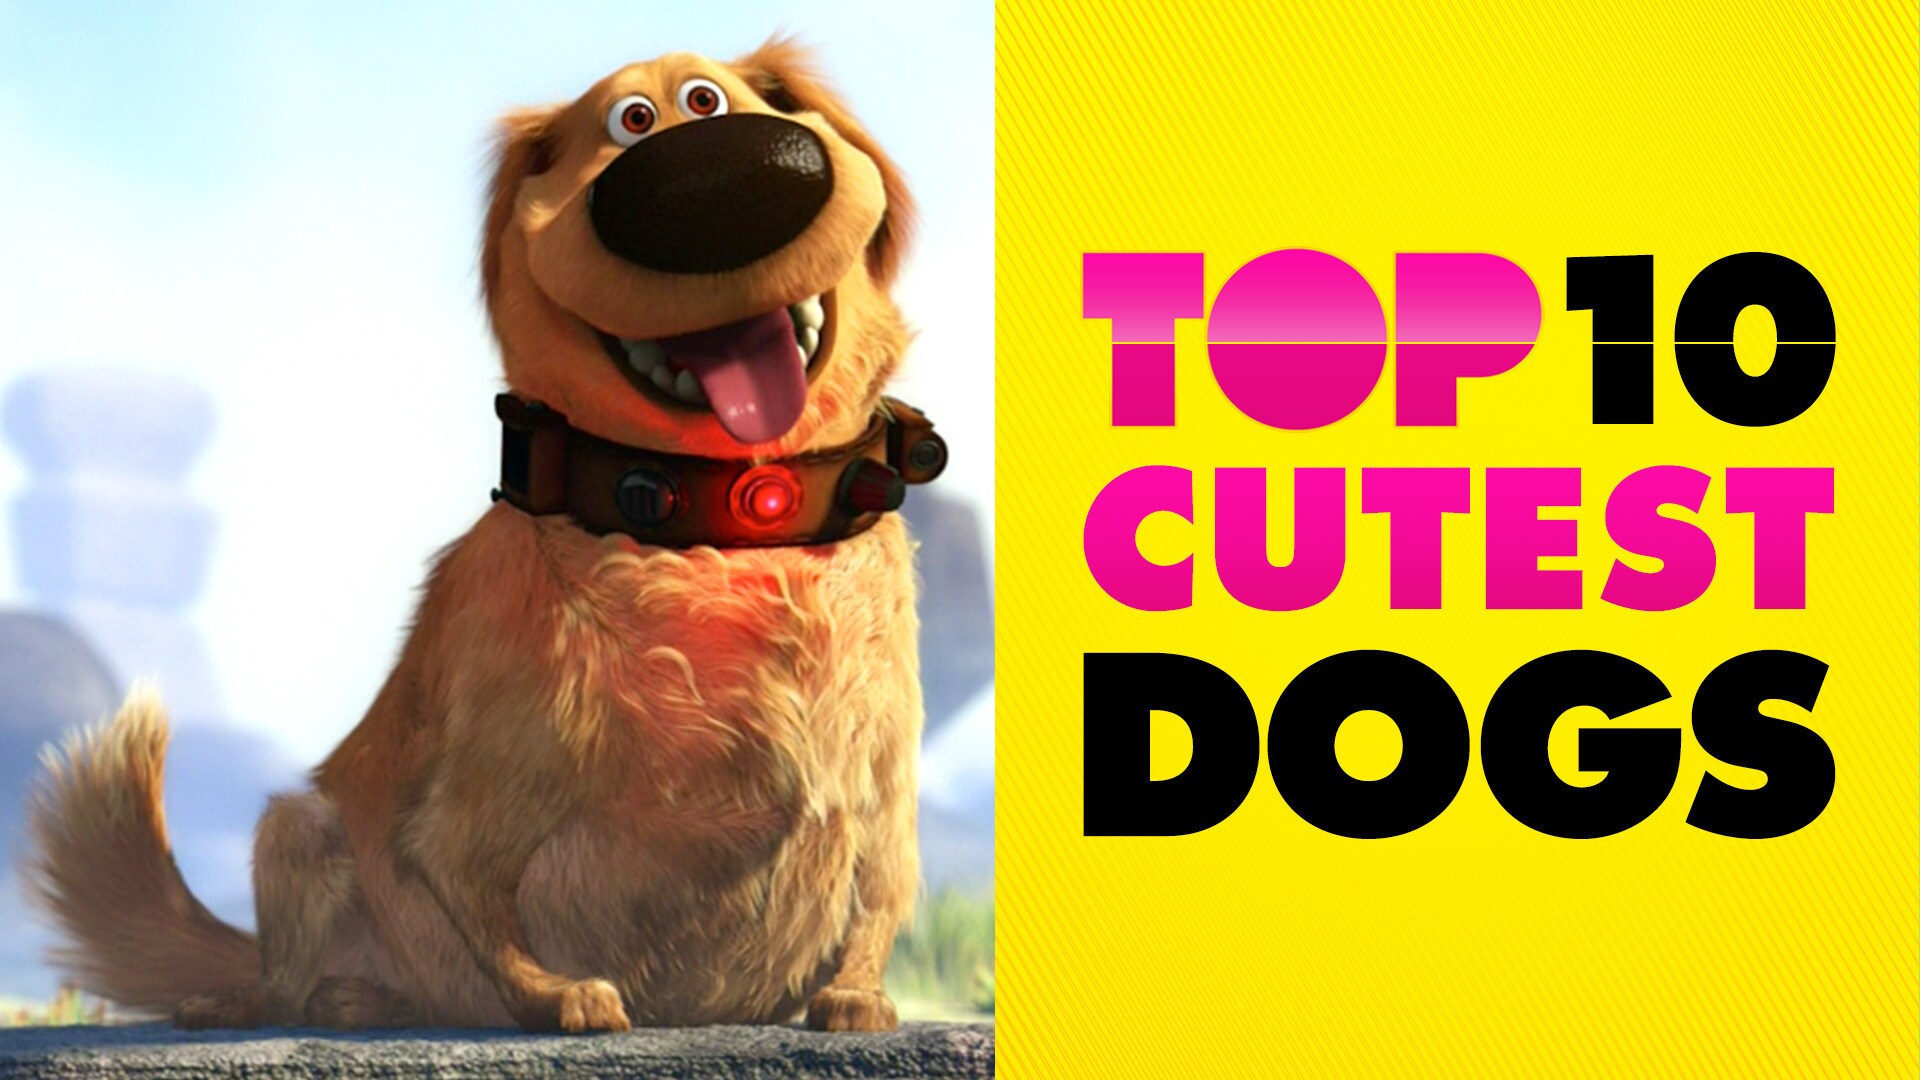 Cutest Dogs | Disney Top 10